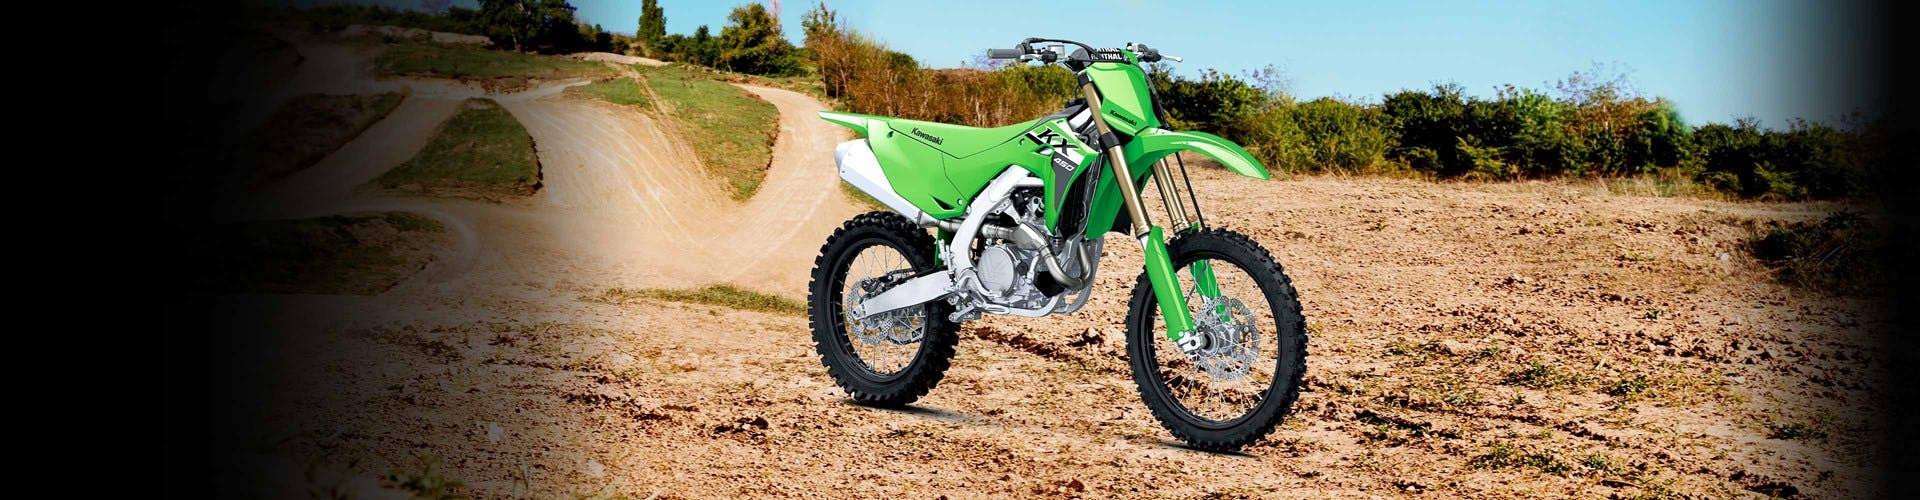 Kawasaki KX450 in lime green colour